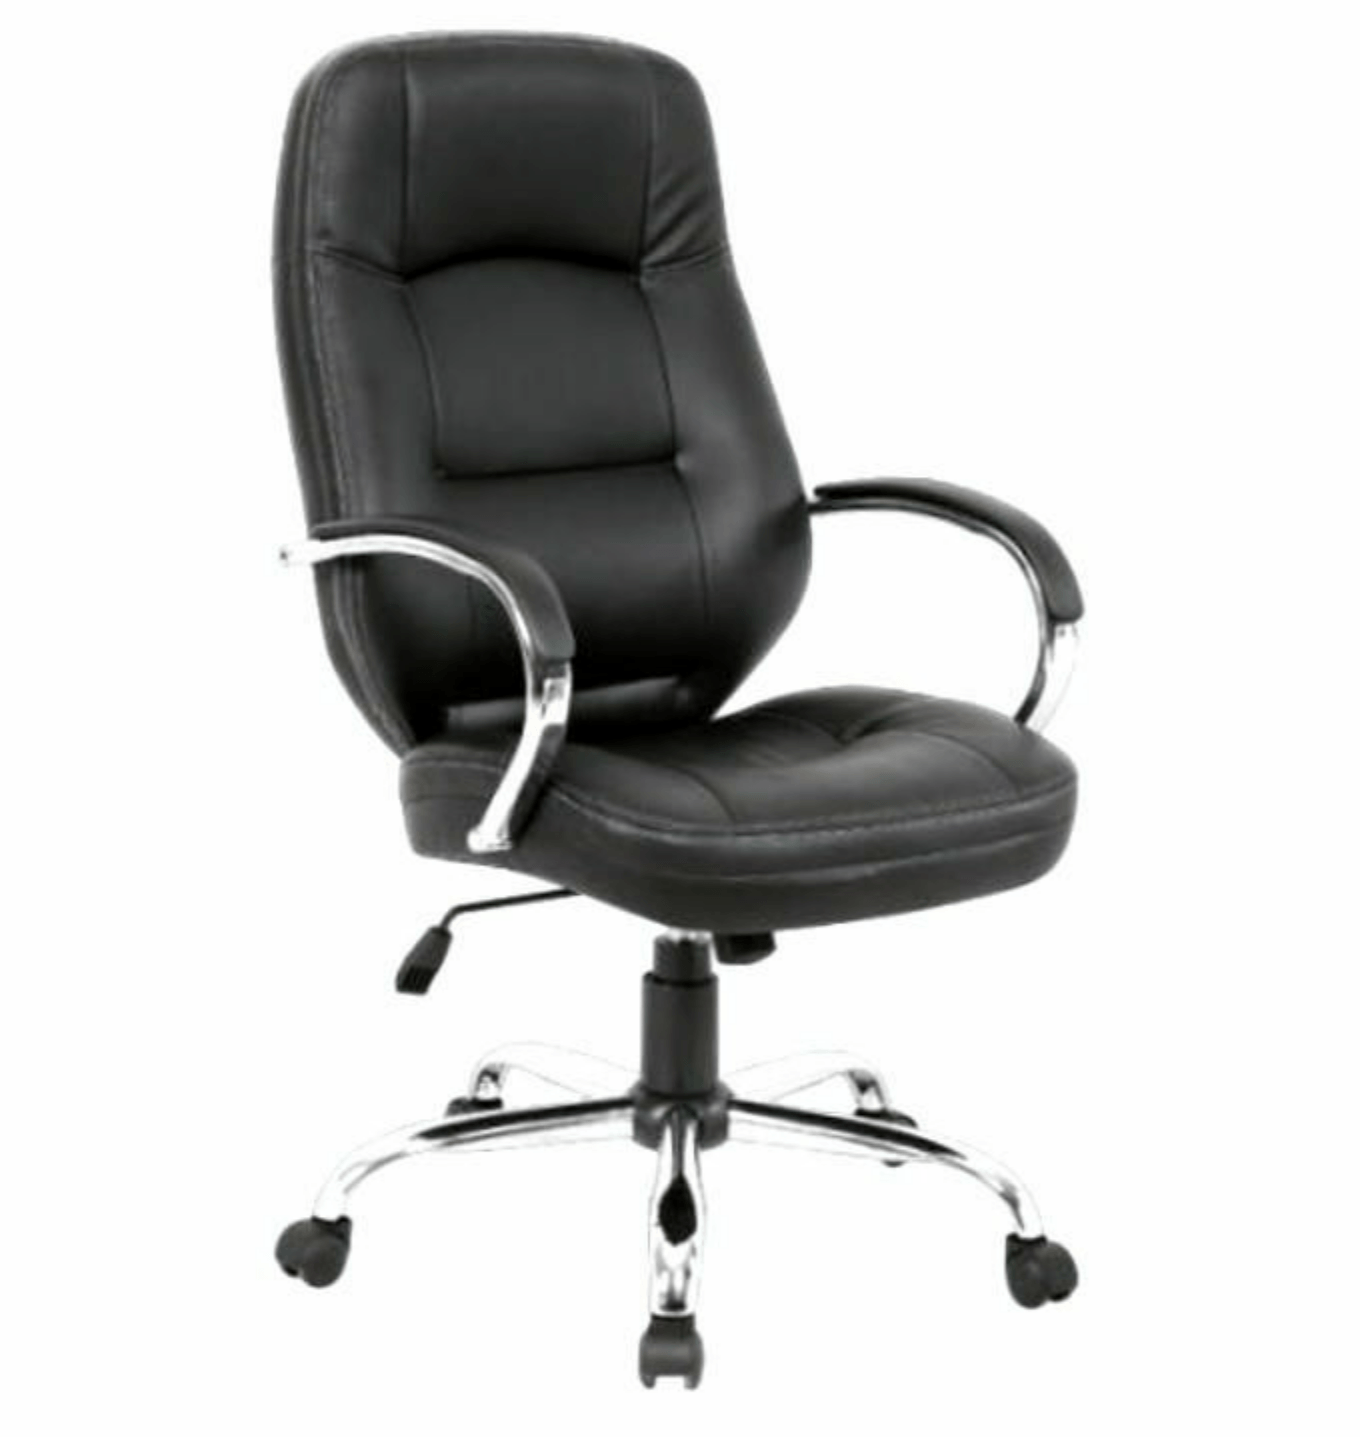 Ambassador High back leather swivel revolving office chair